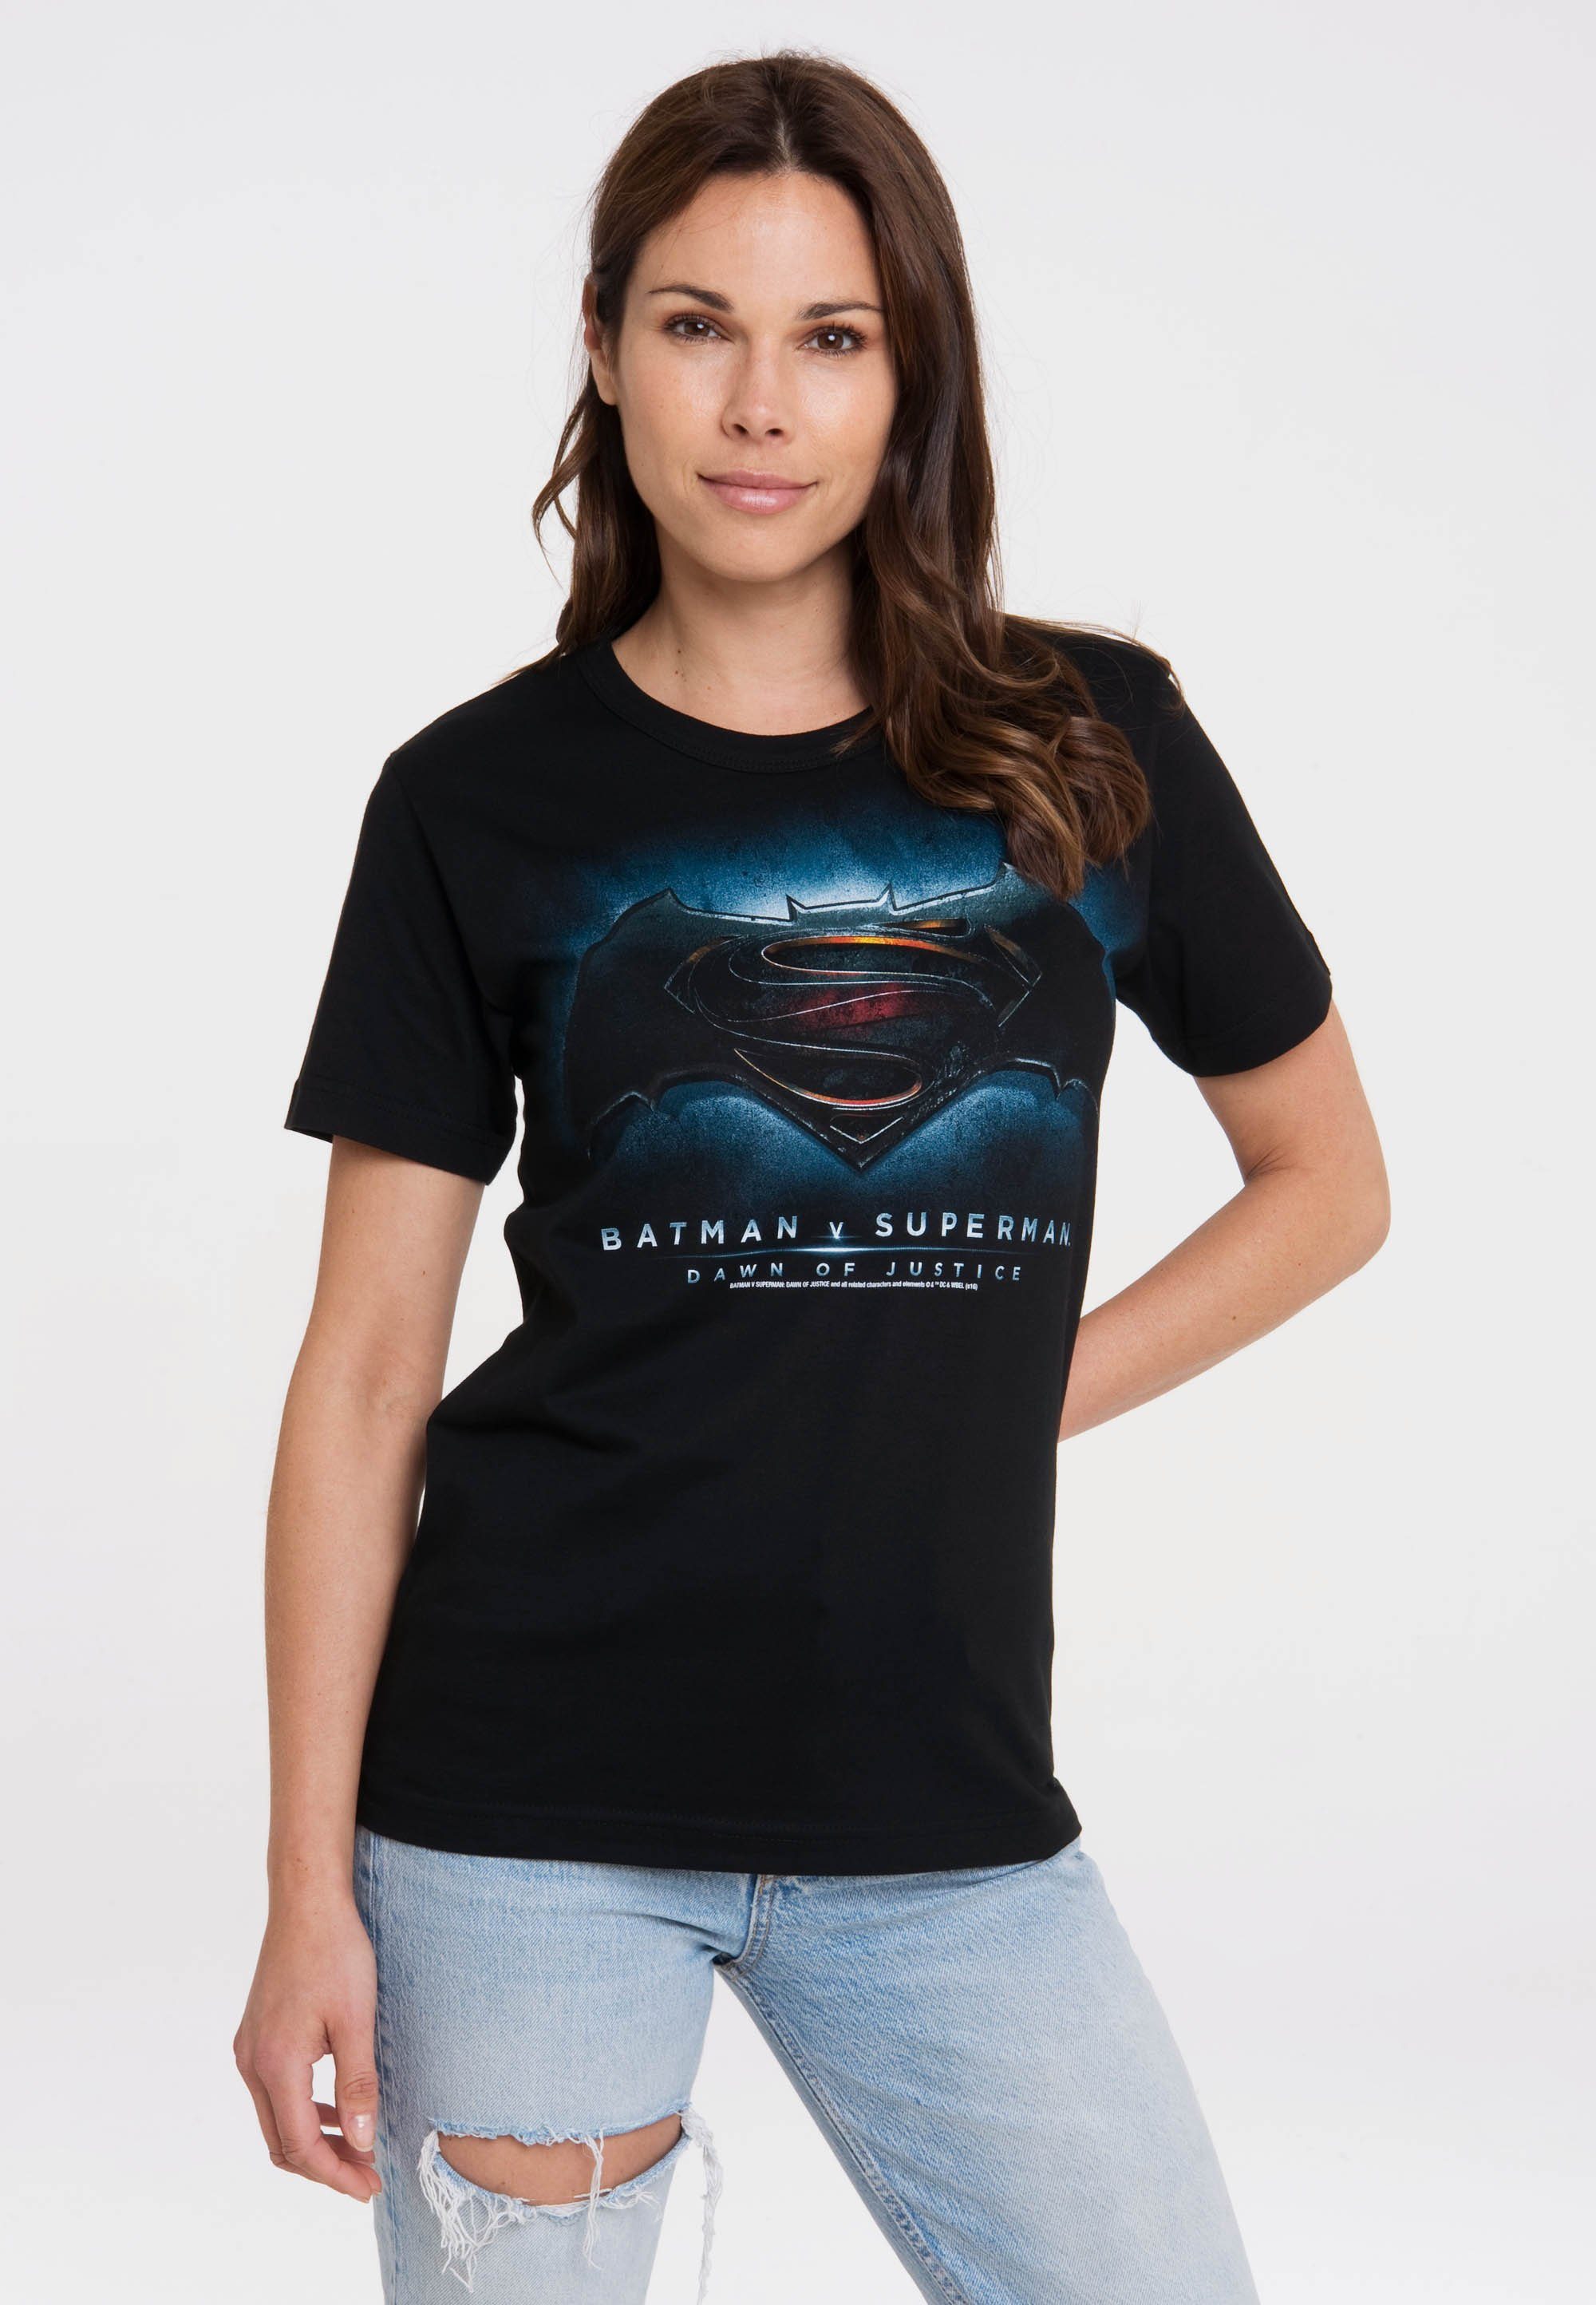 T-Shirt Superhelden-Print Batman v großem LOGOSHIRT Superman Justice mit -